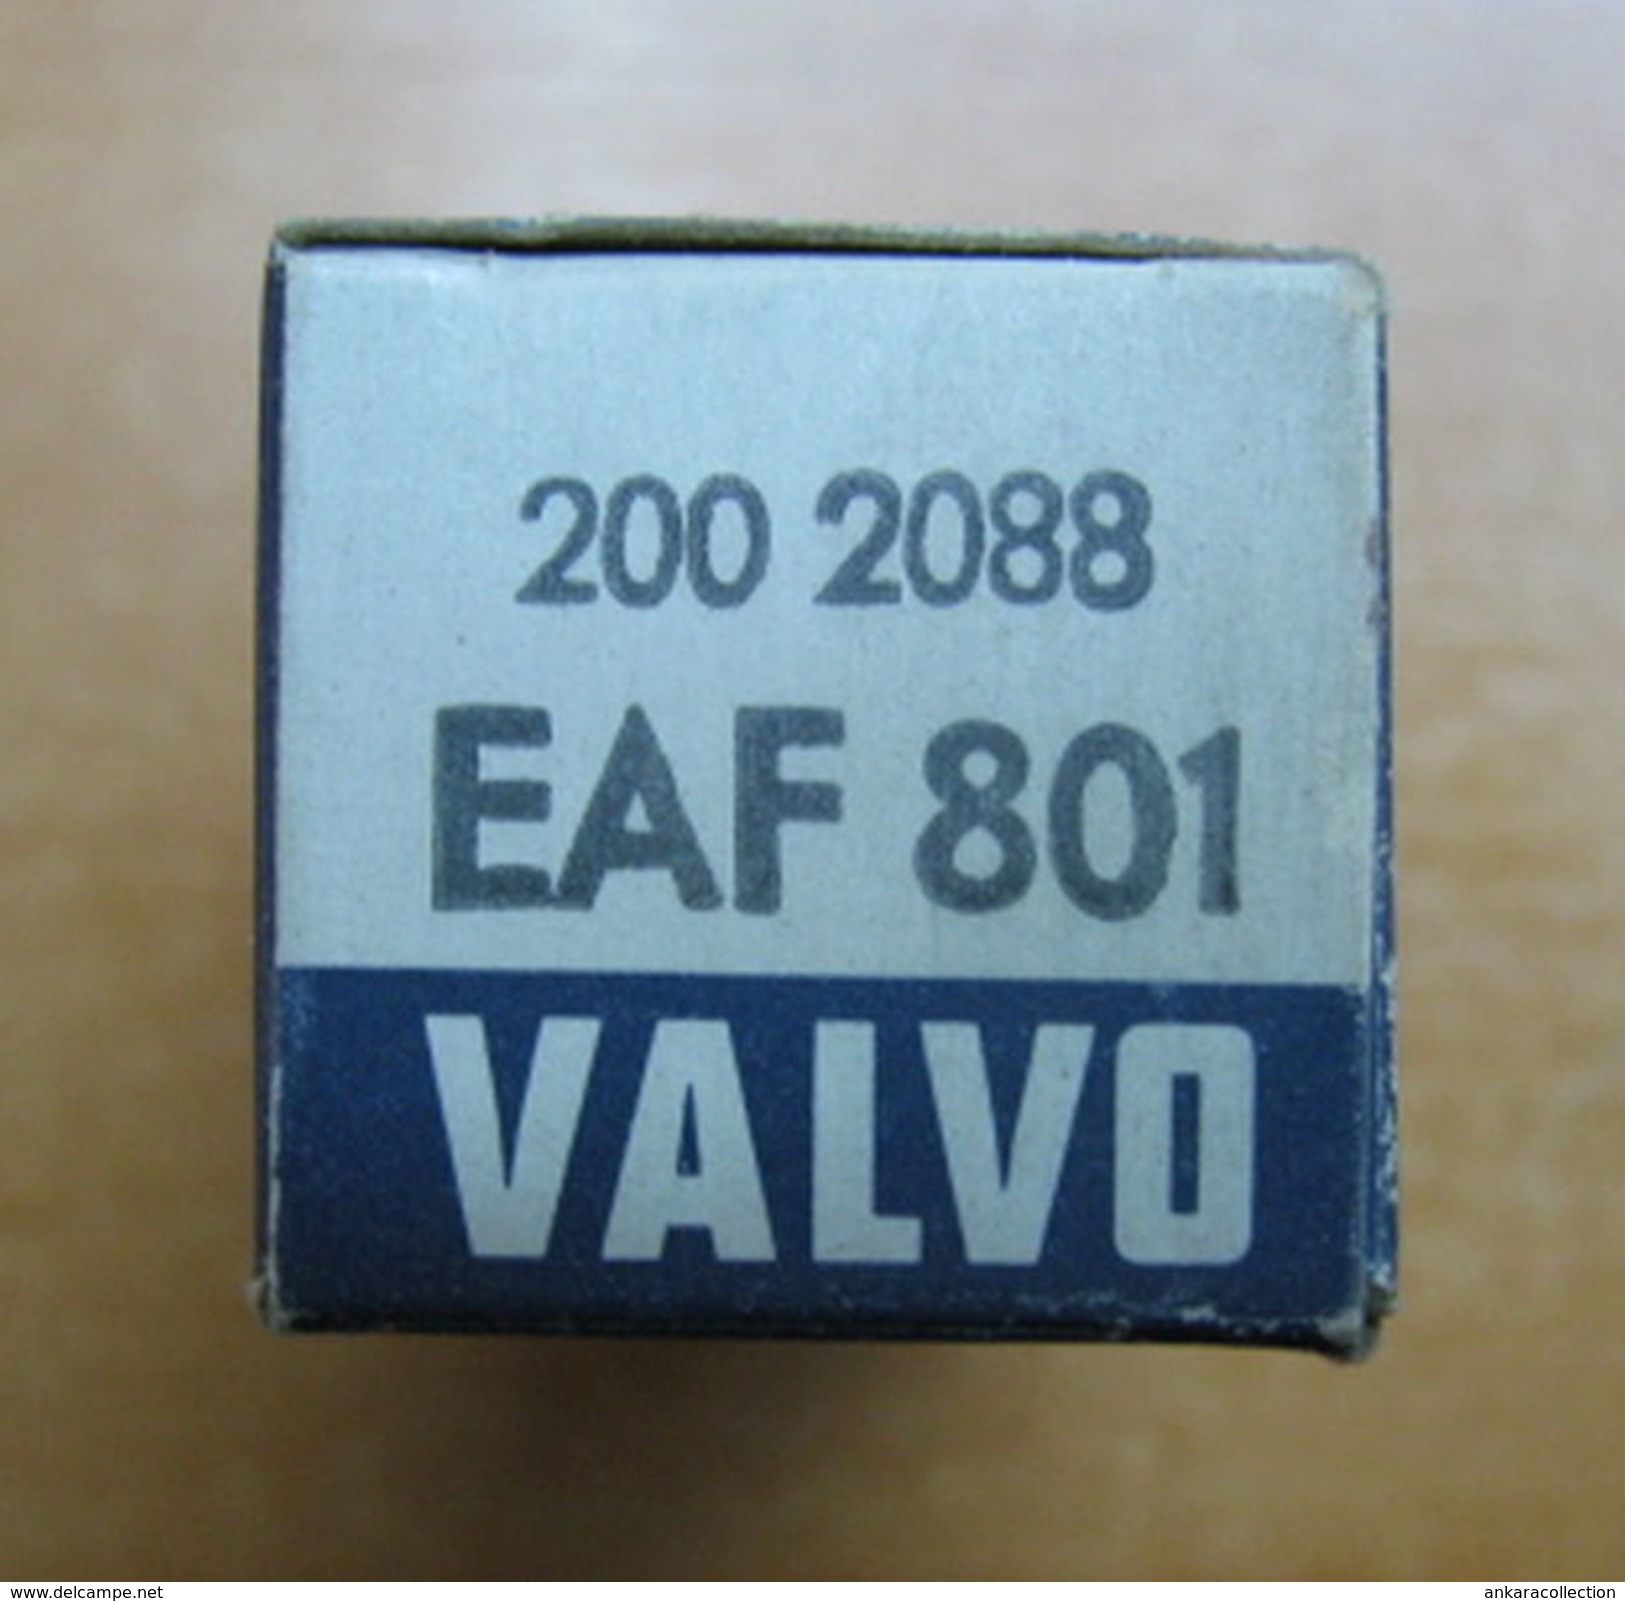 AC - VALVO EAF 801 200 2088 RADIO TUBE - Röhren